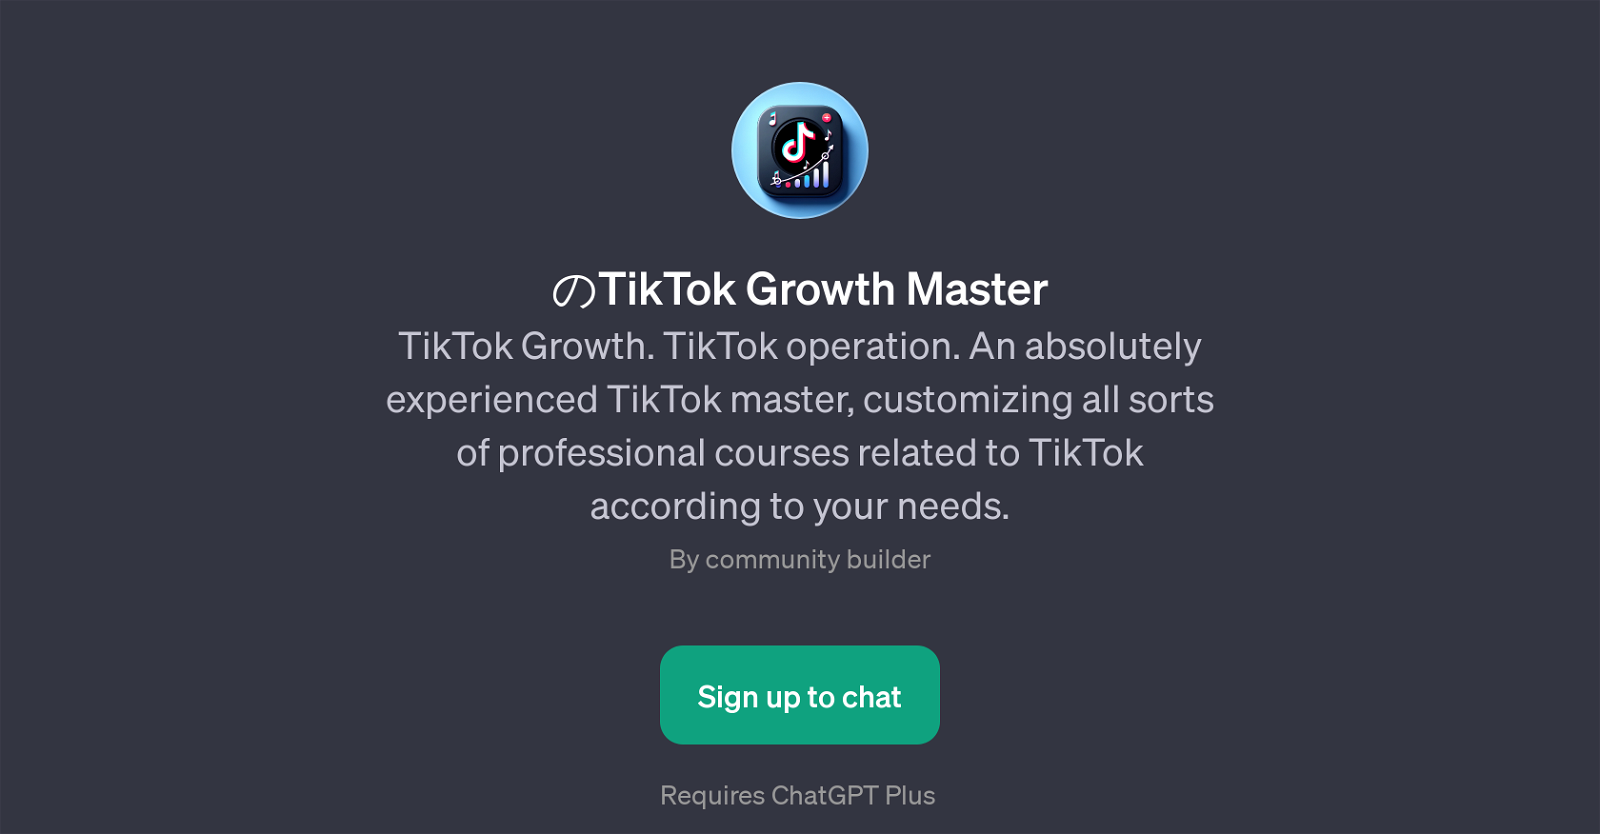 TikTok Growth Master website